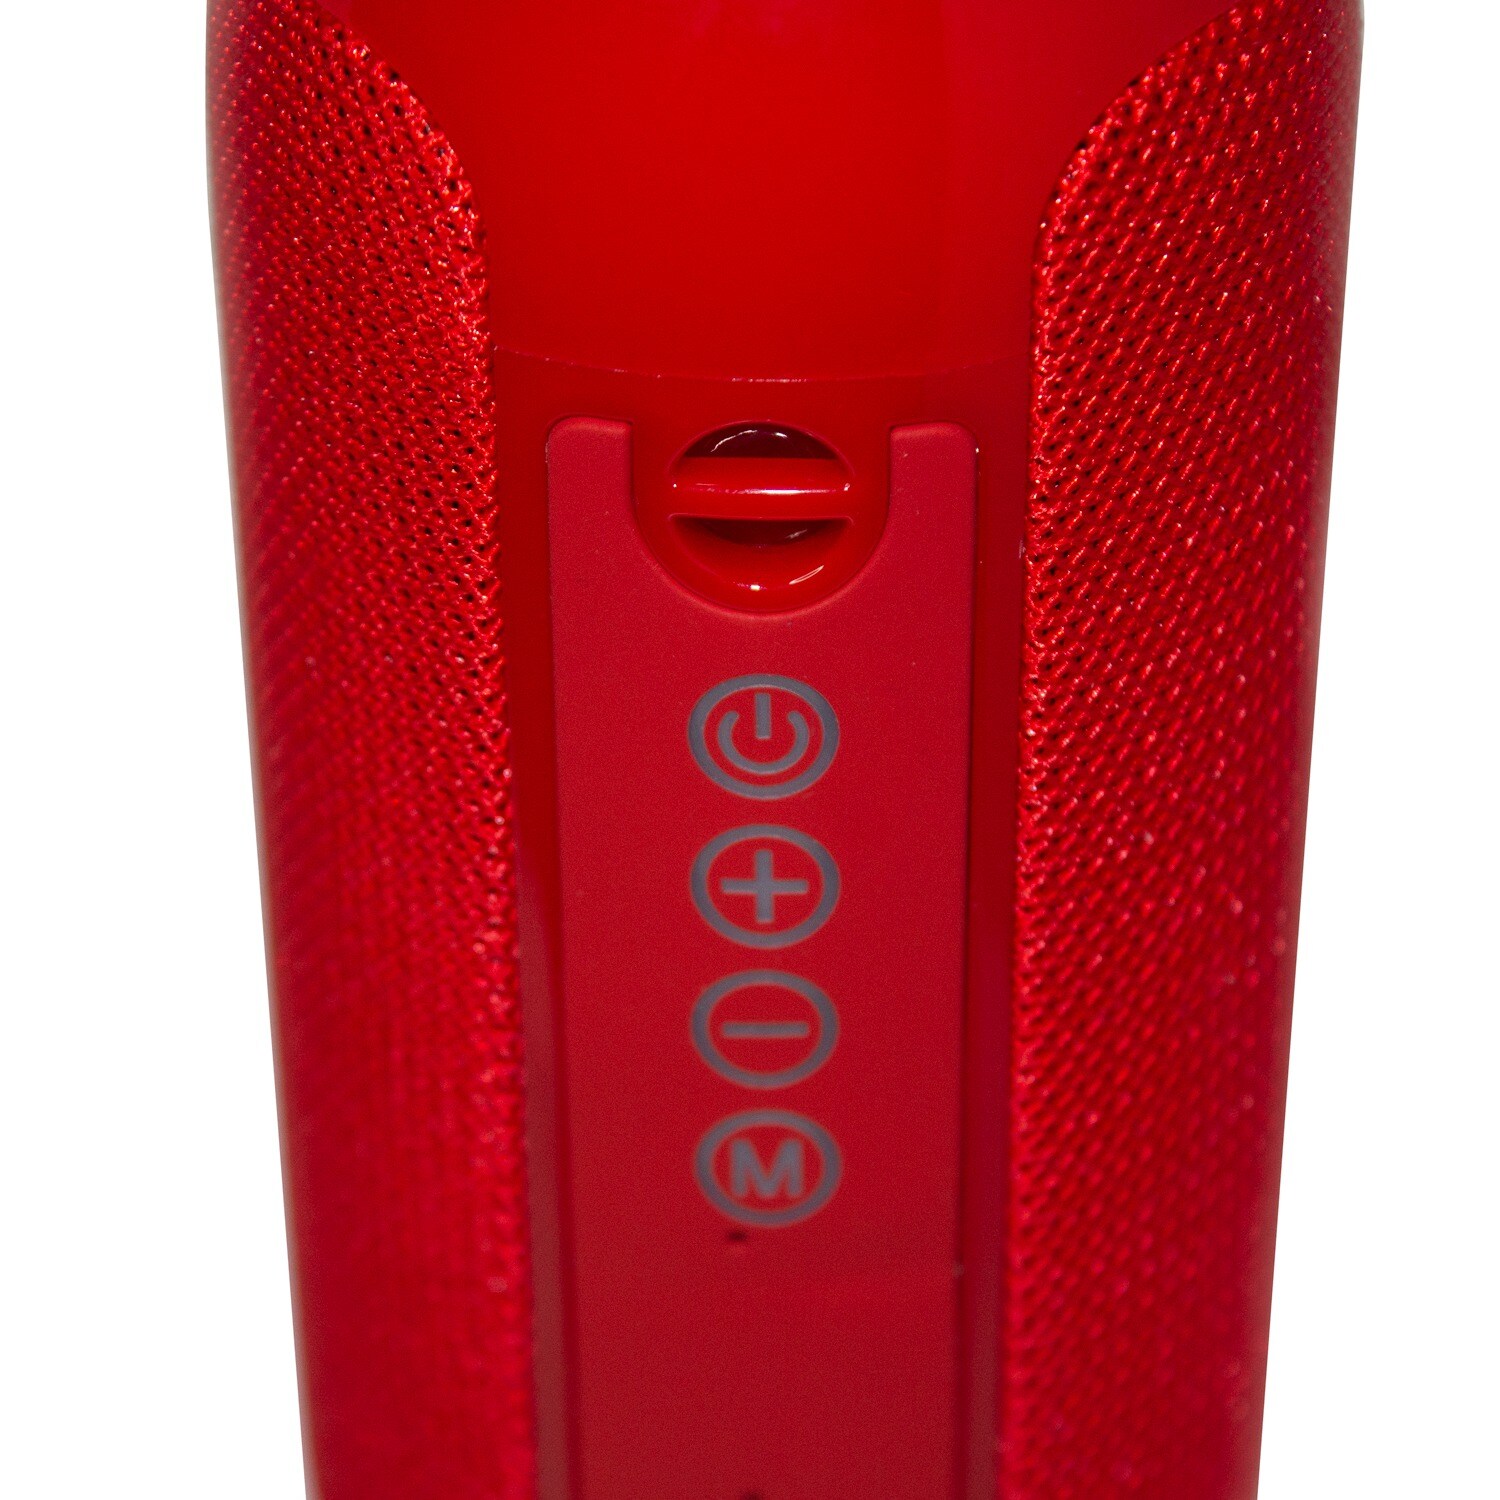 TE-V2 Bluetooth Speaker Portable Brand New Red Red - 5